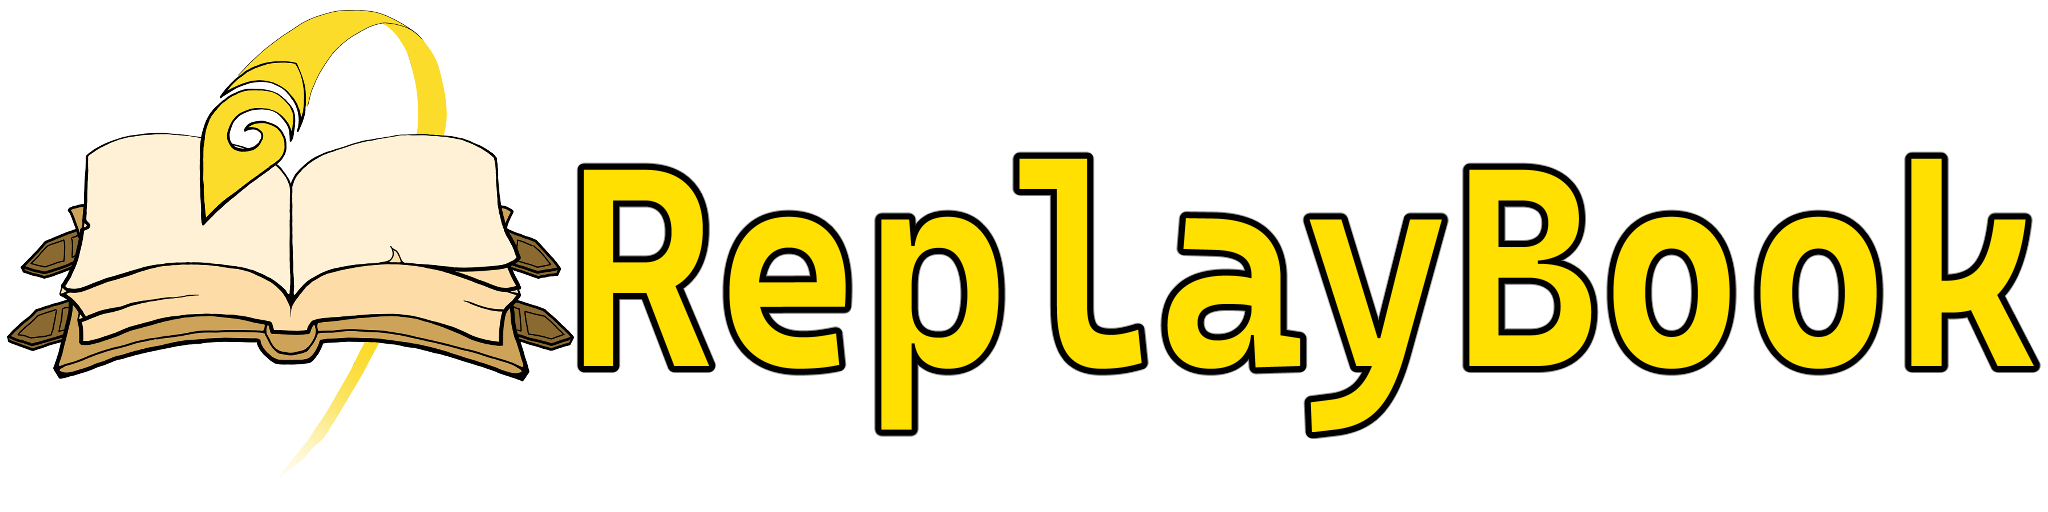 ReplayBook Logo Banner Image